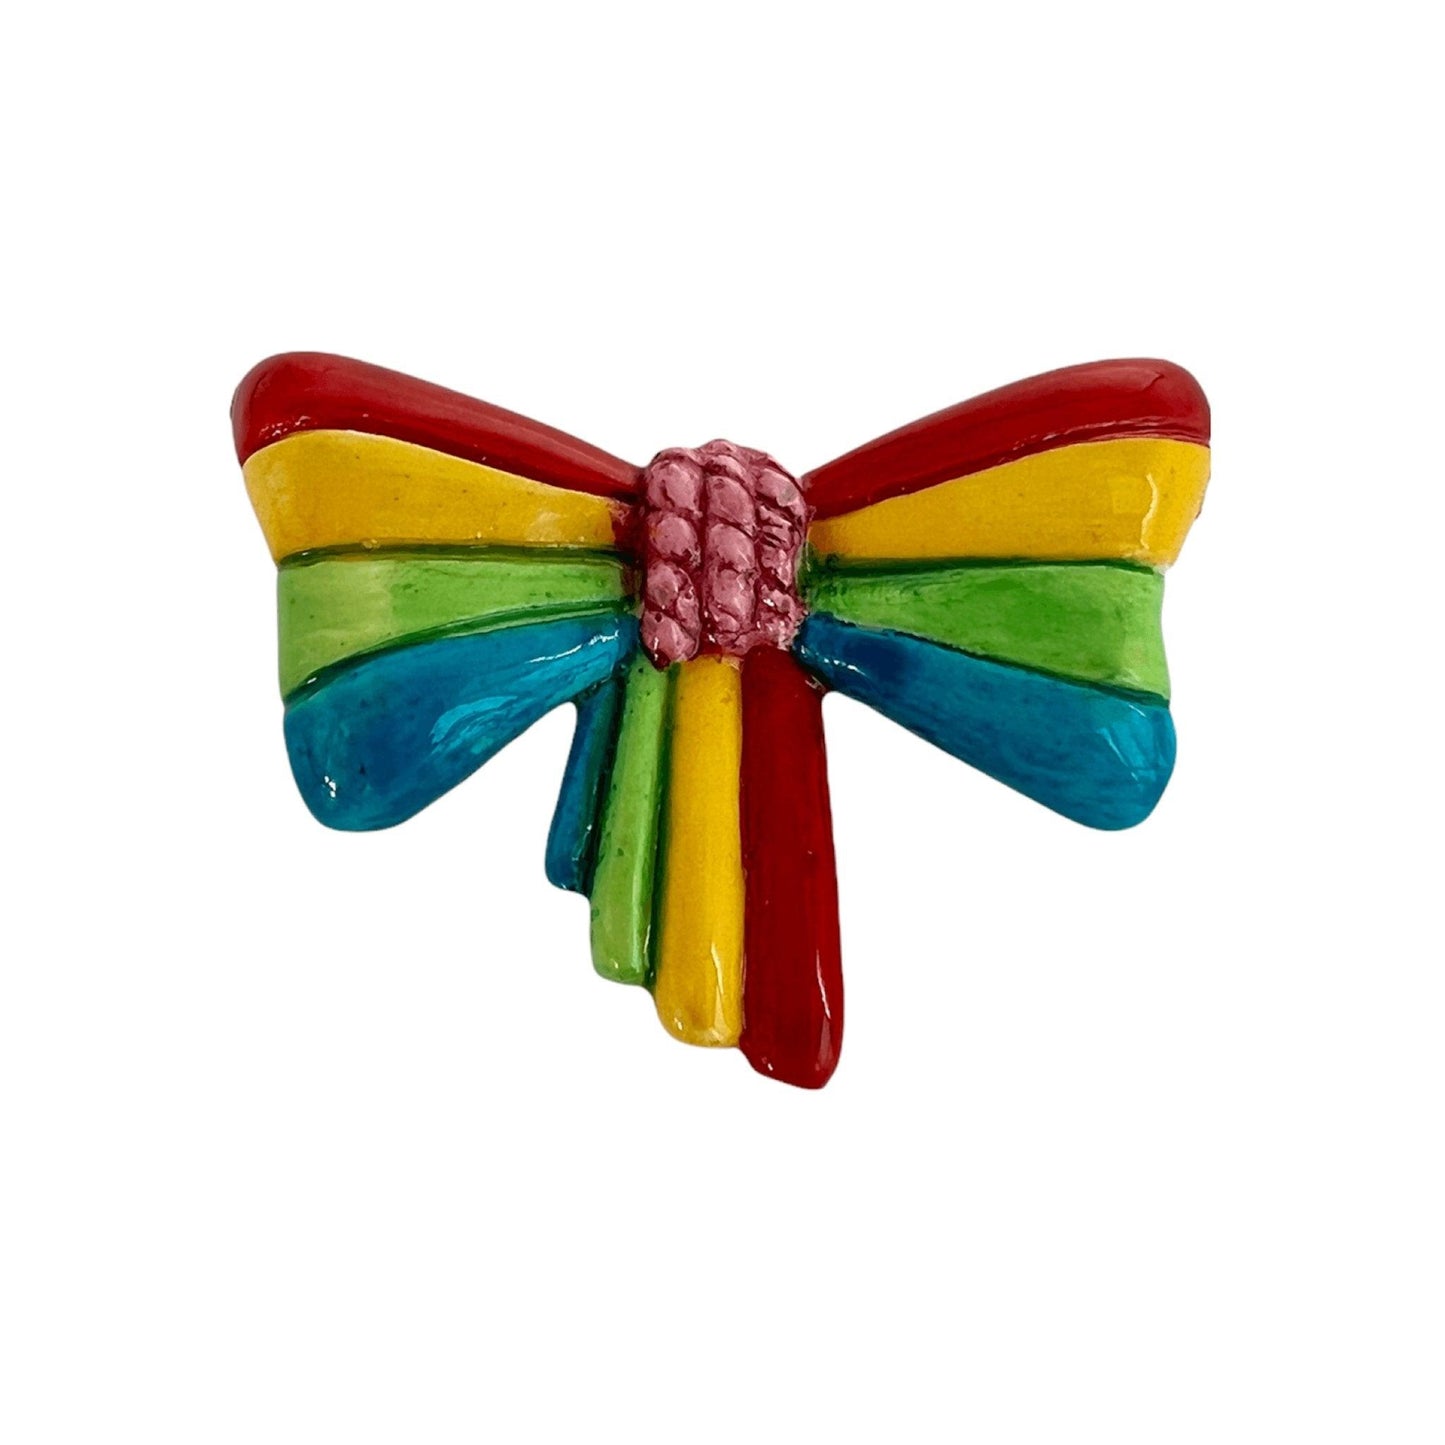 Vintage Plastic Cheerful Multicolor Bow Pin Brooch